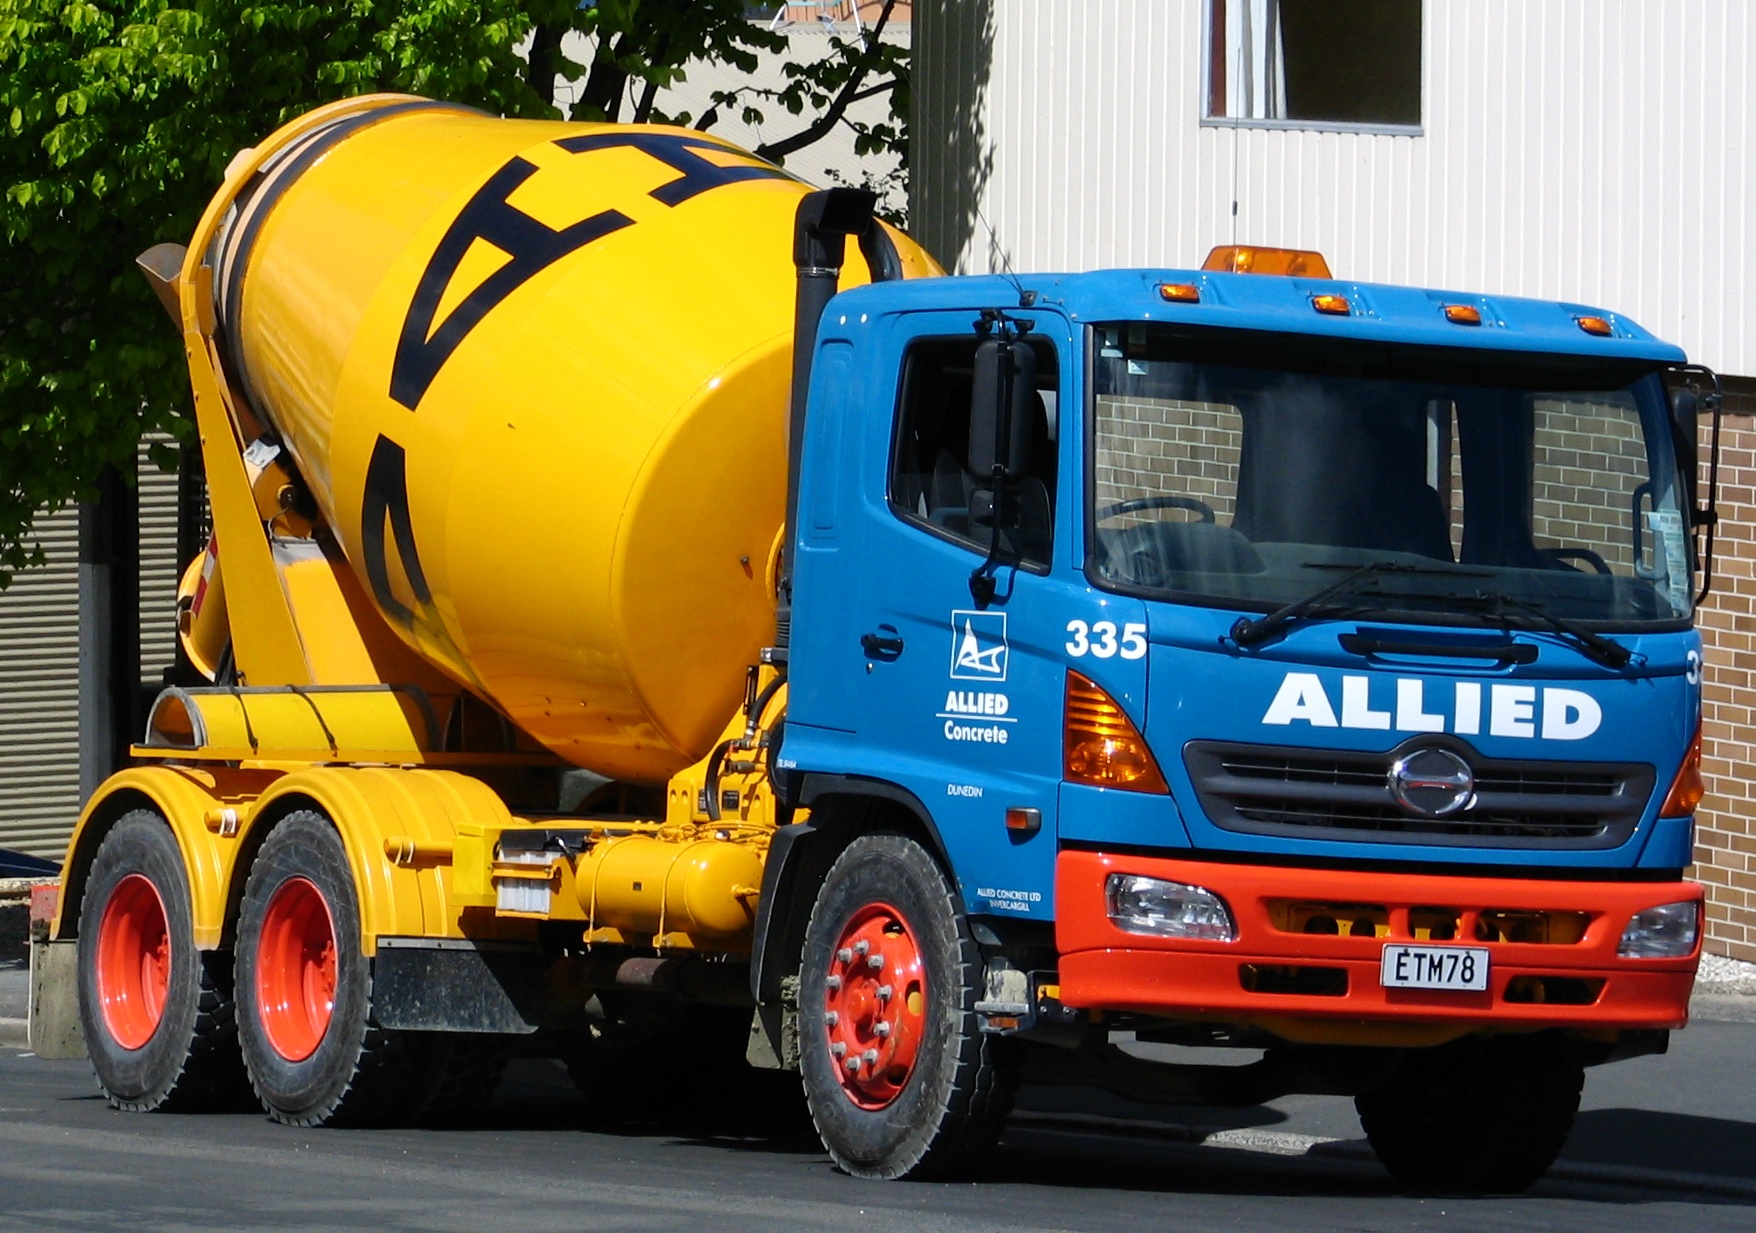 File:Allied Concrete mixer truck, Dunedin, NZ.jpg - Wikimedia Commons